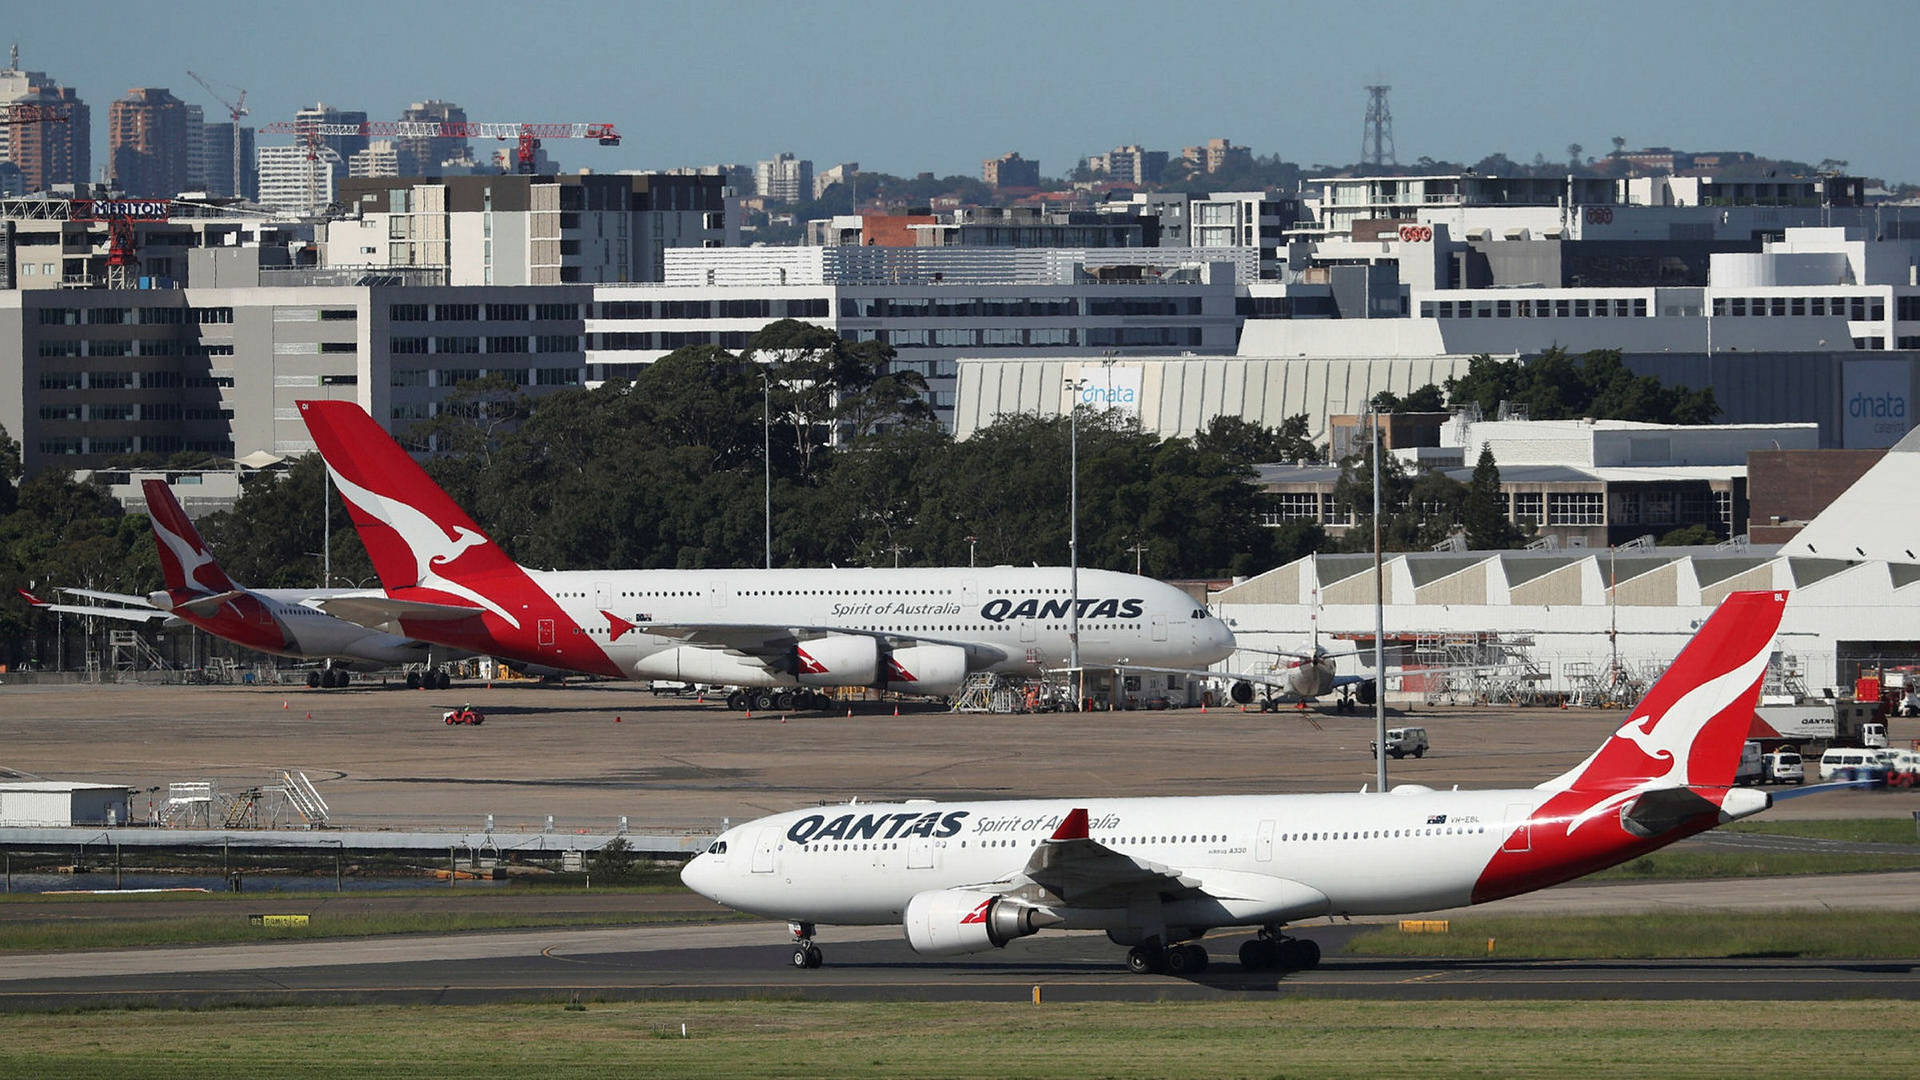 Airbusdi Qantas All'aeroporto Trafficato. Sfondo